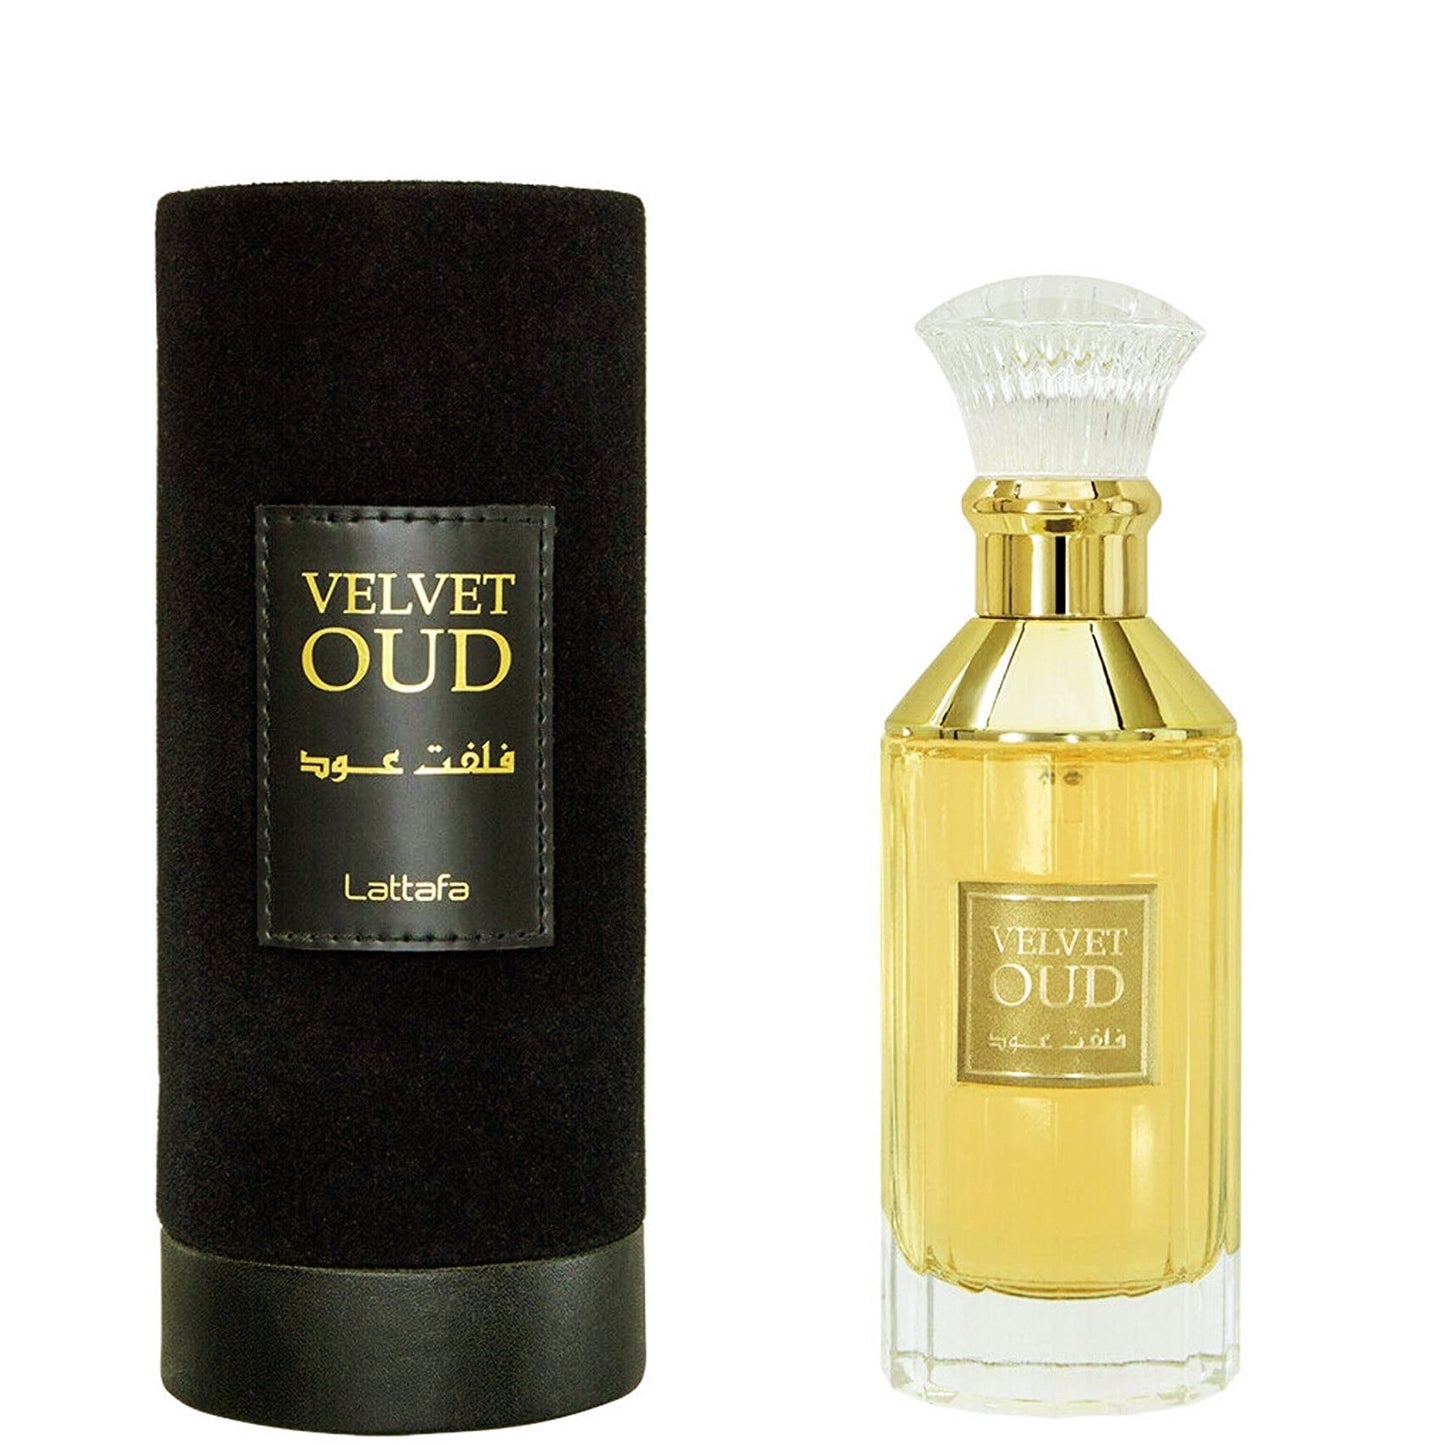 30 ml Eau de Parfum Velvet Oud fragancia de almizcle Oud para hombres y mujeres